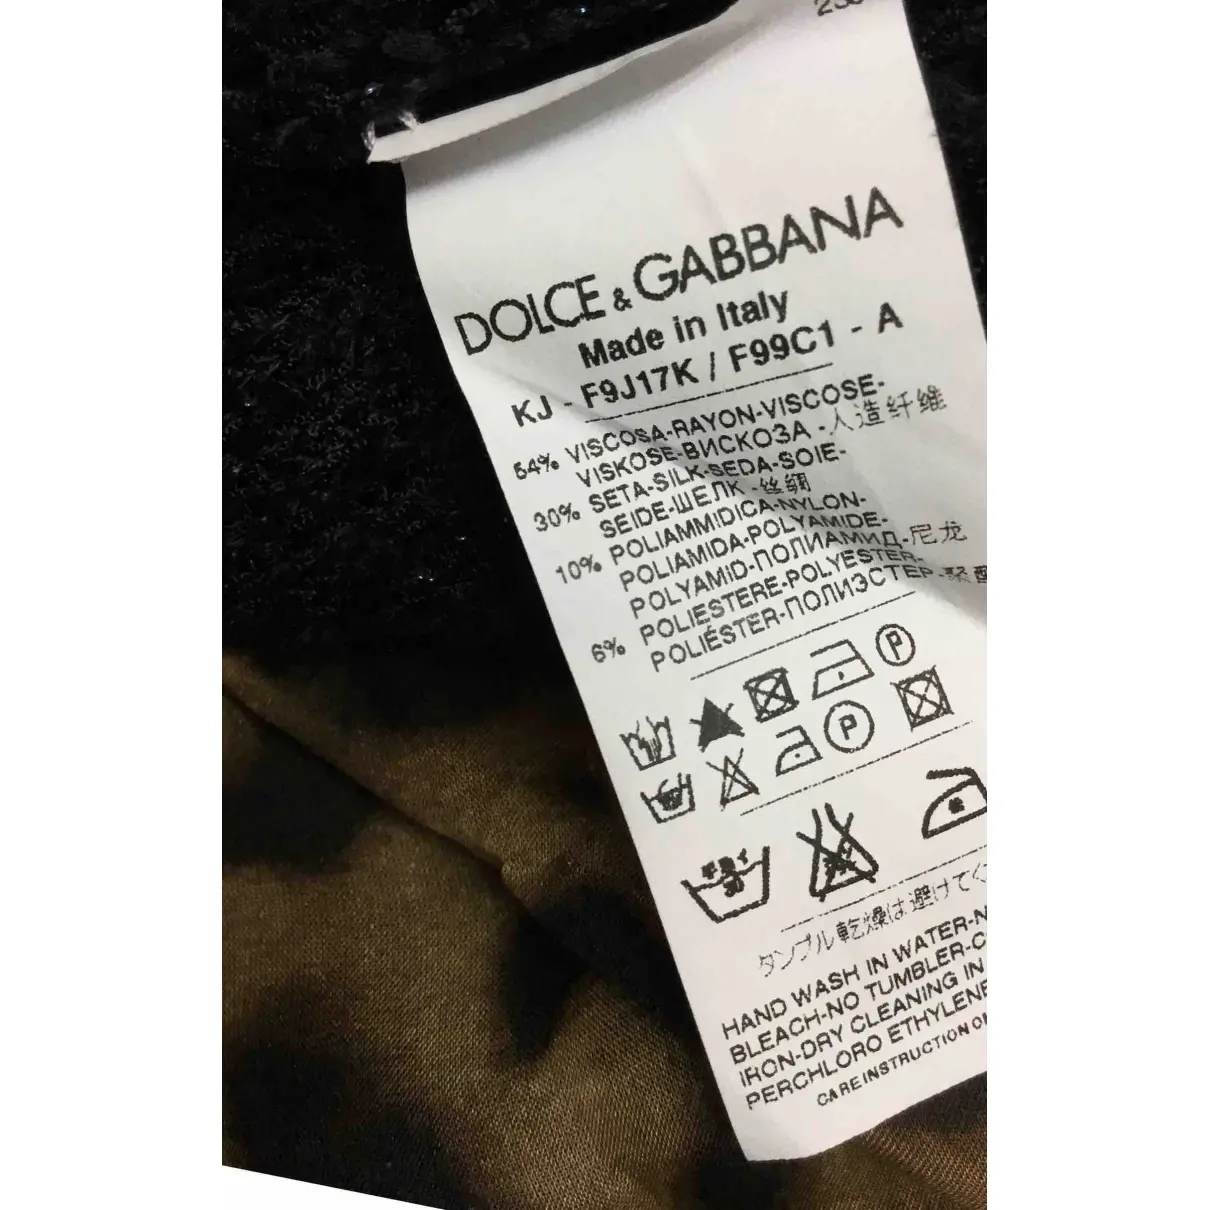 Coat Dolce & Gabbana